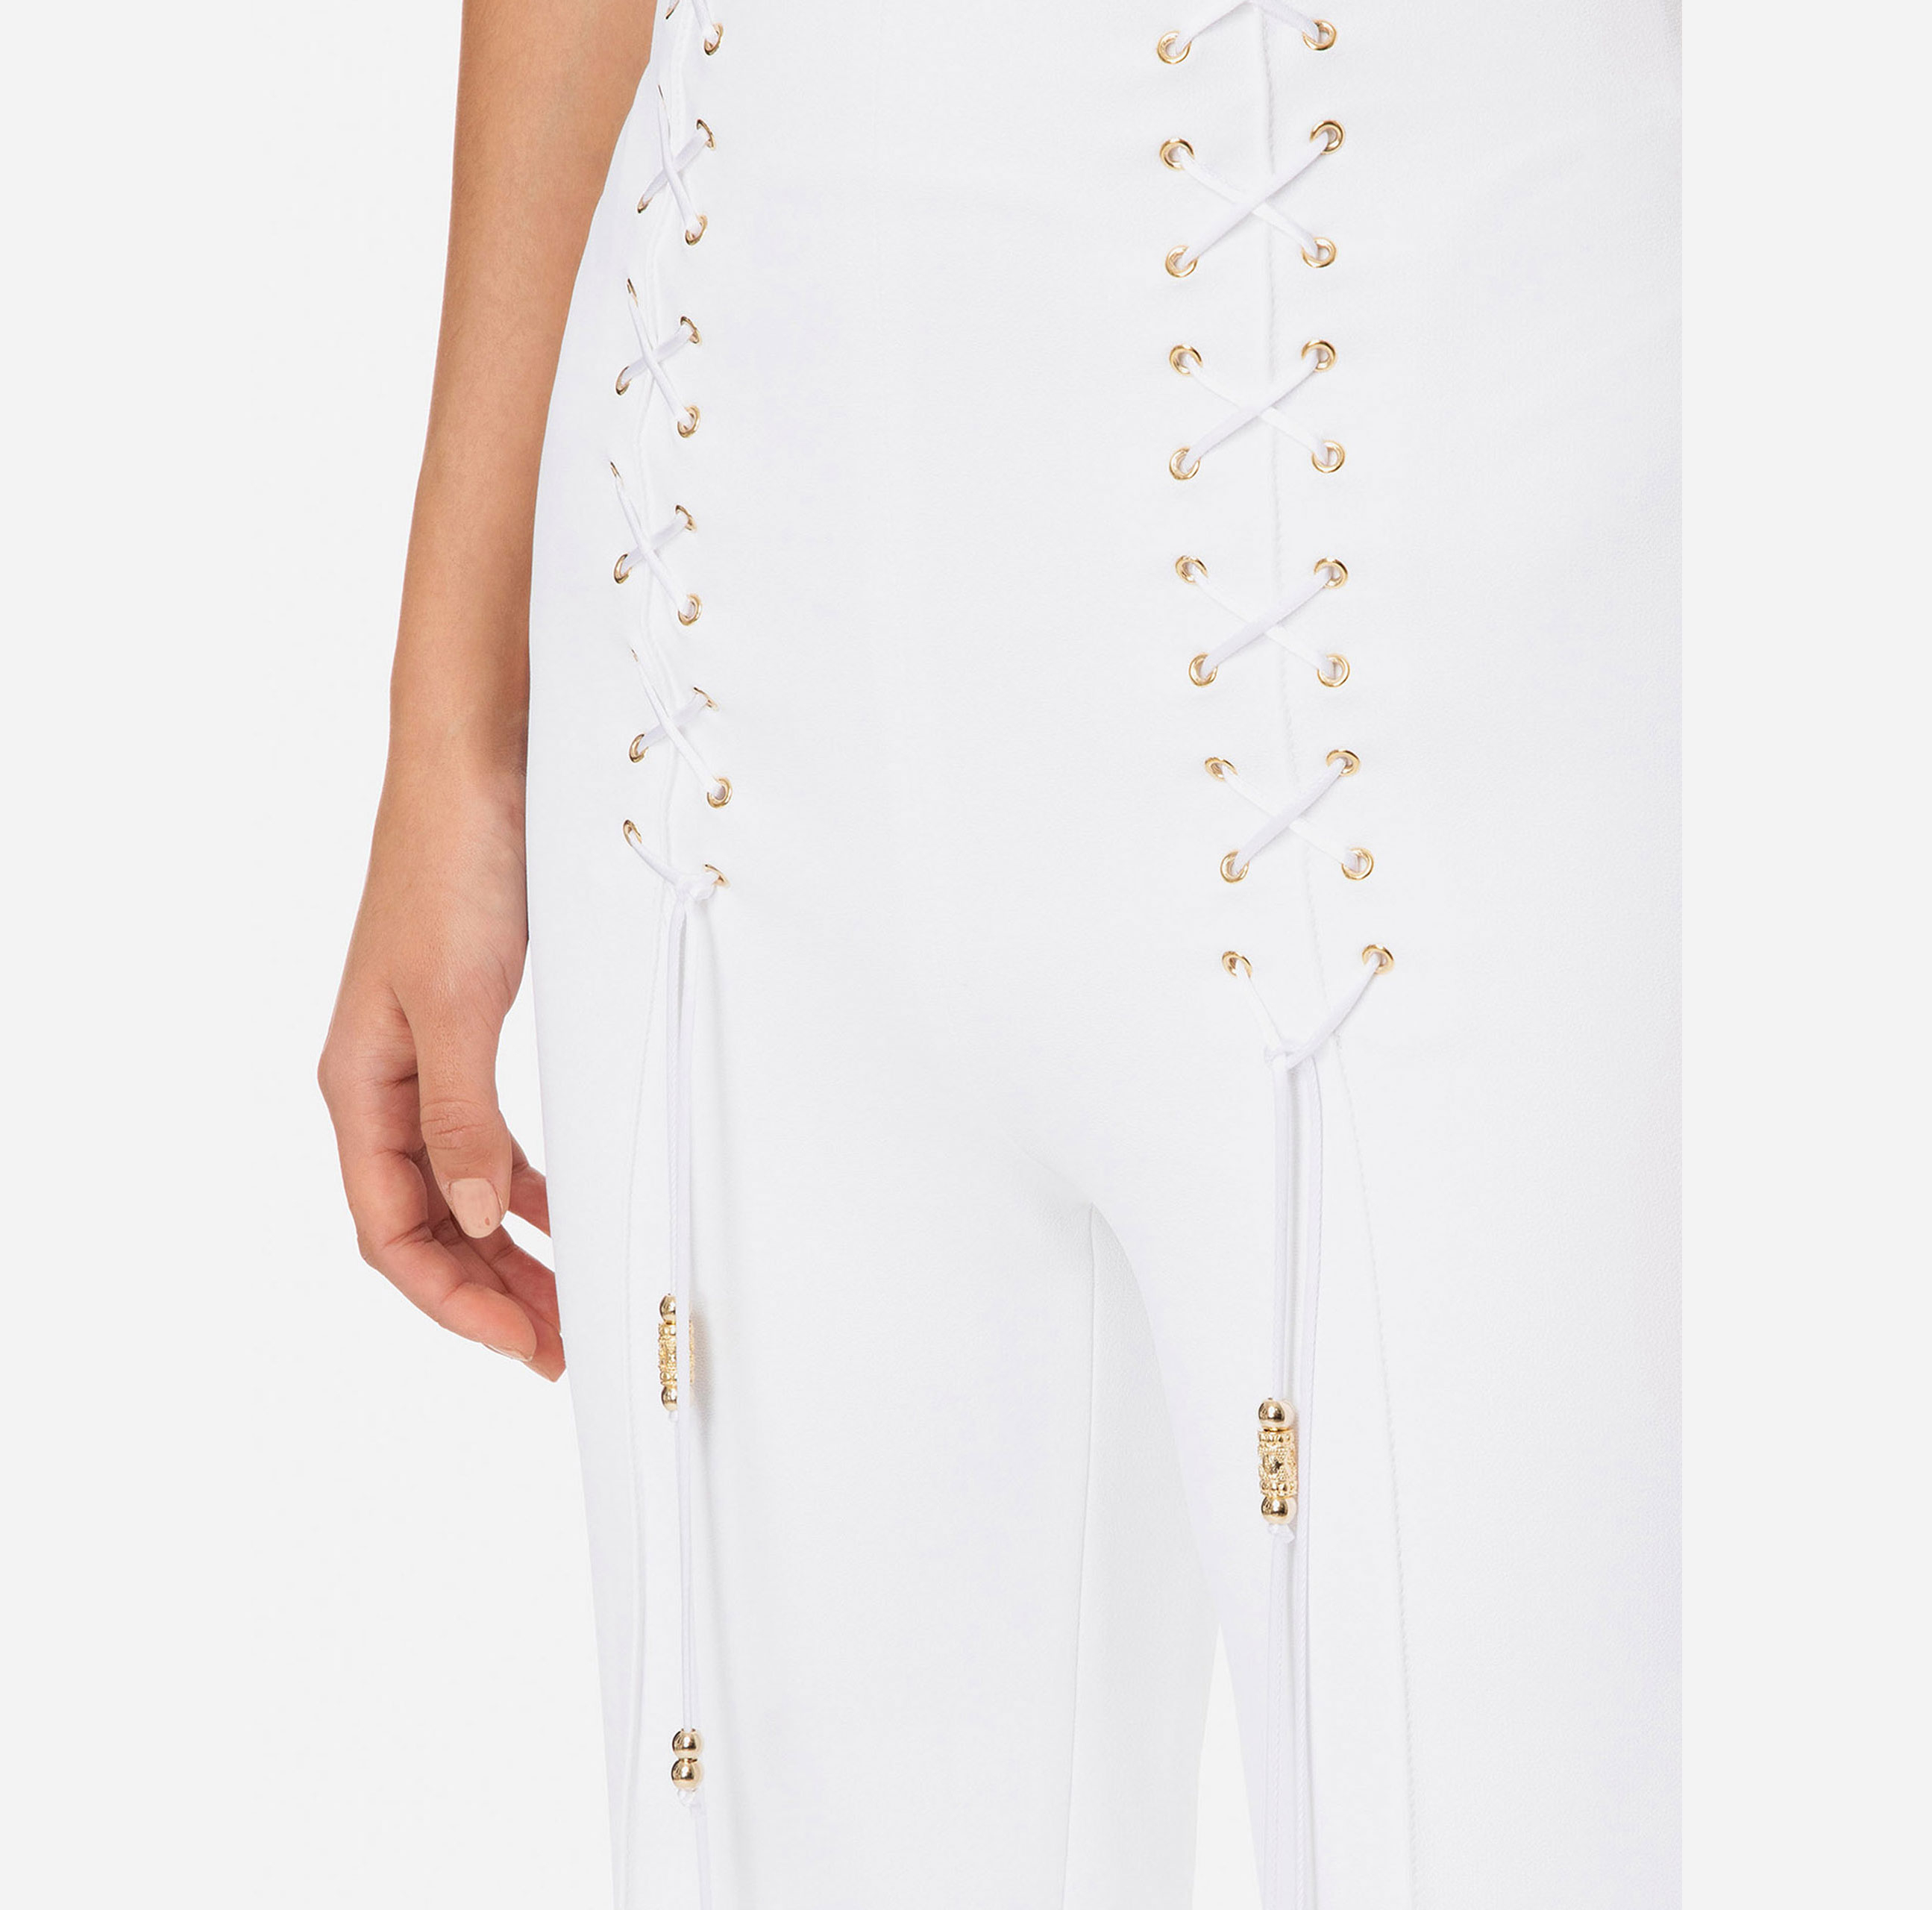 Bell-bottom trousers with criss-cross pattern - Elisabetta Franchi